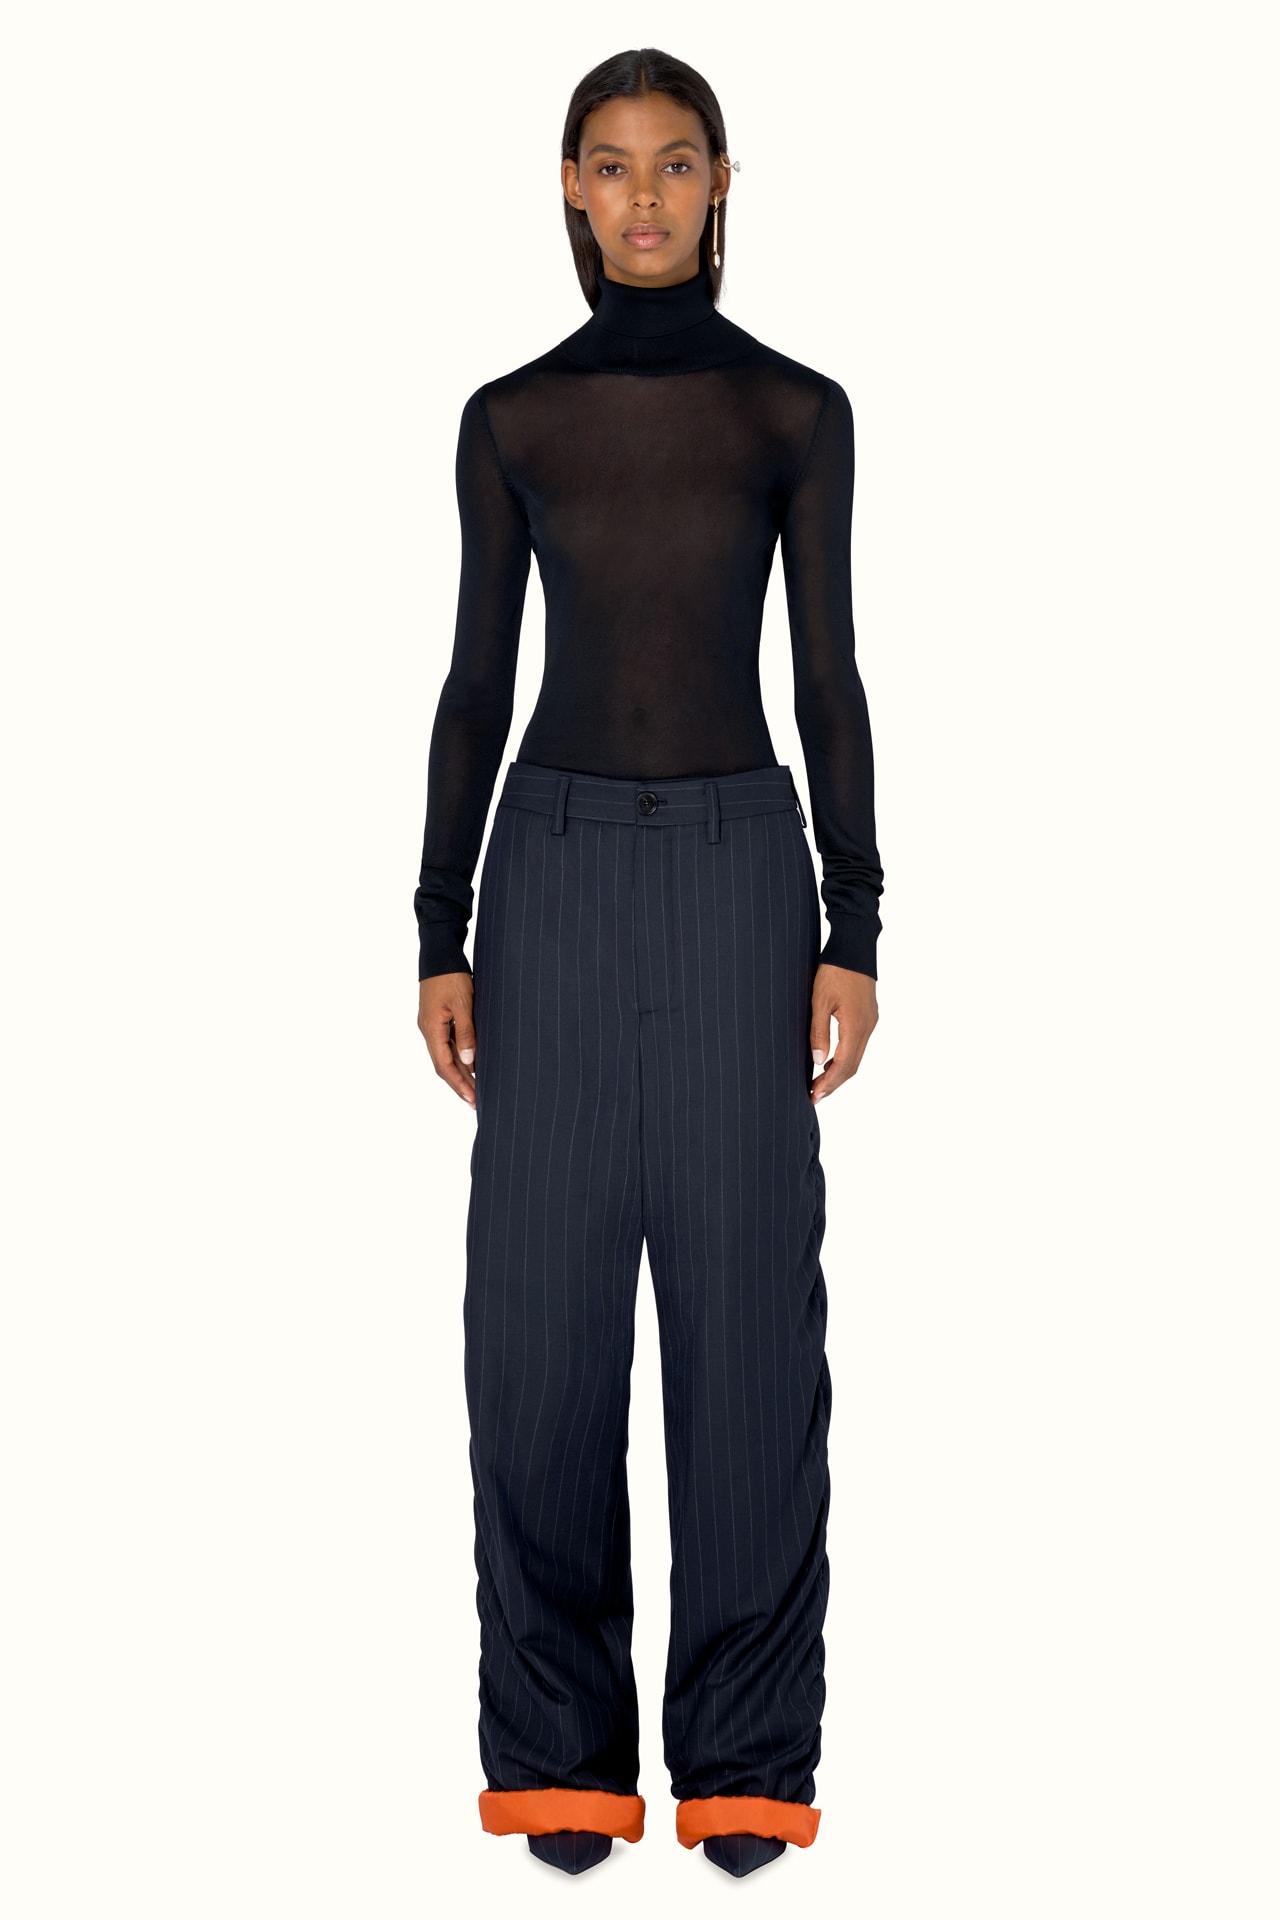 FENTY Rihanna Release 9-19 Collection Lookbook Shirt Black Pants Blue